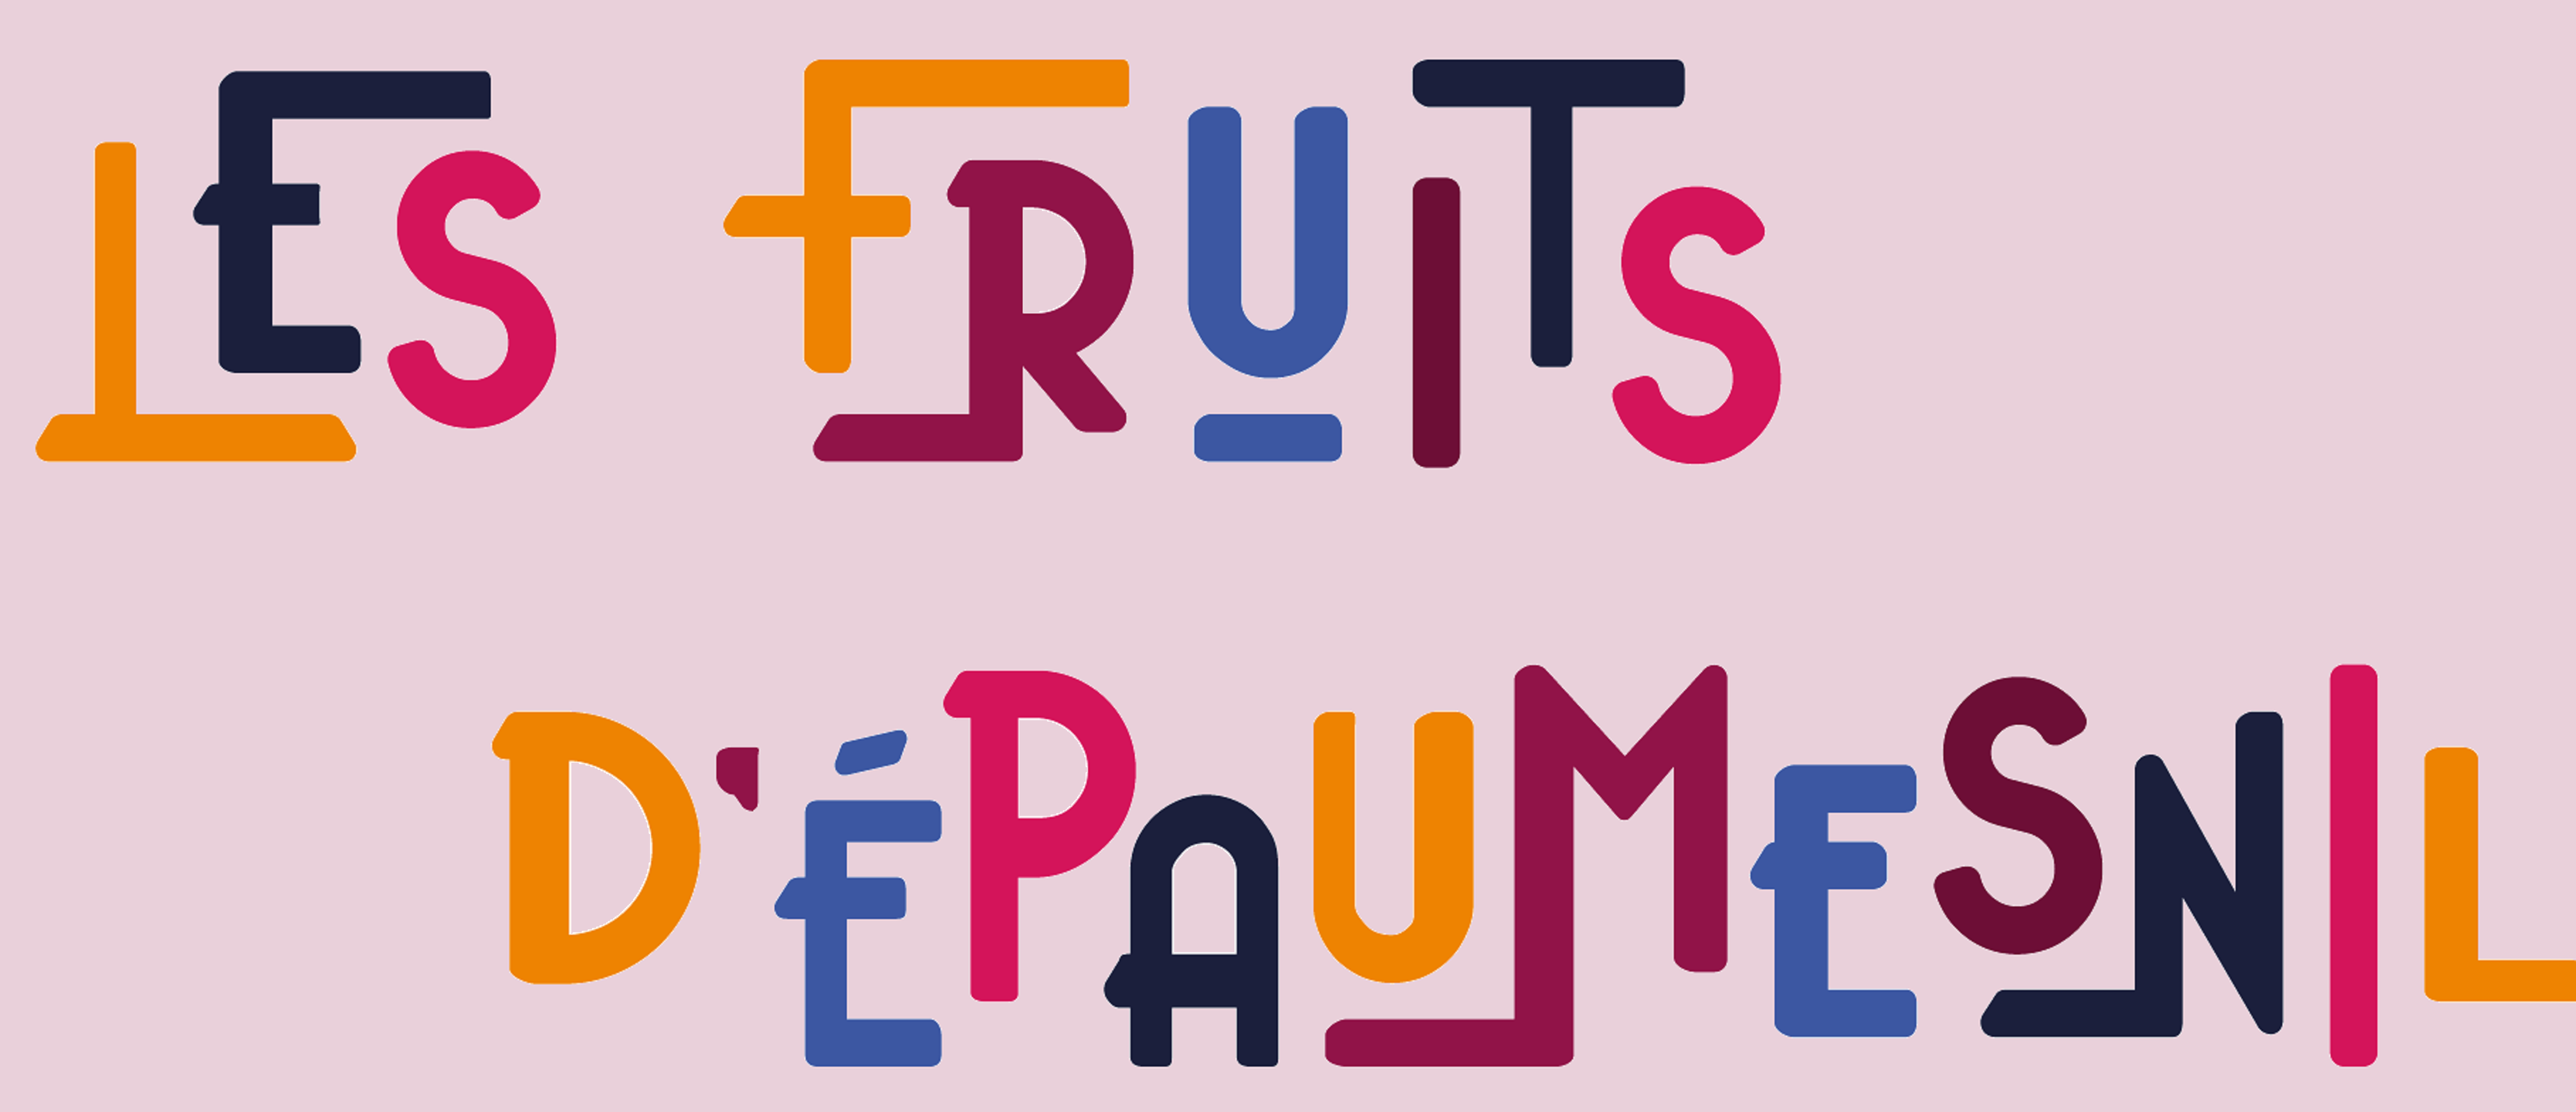 Le logo de Les Fruits d'Epaumesnil 